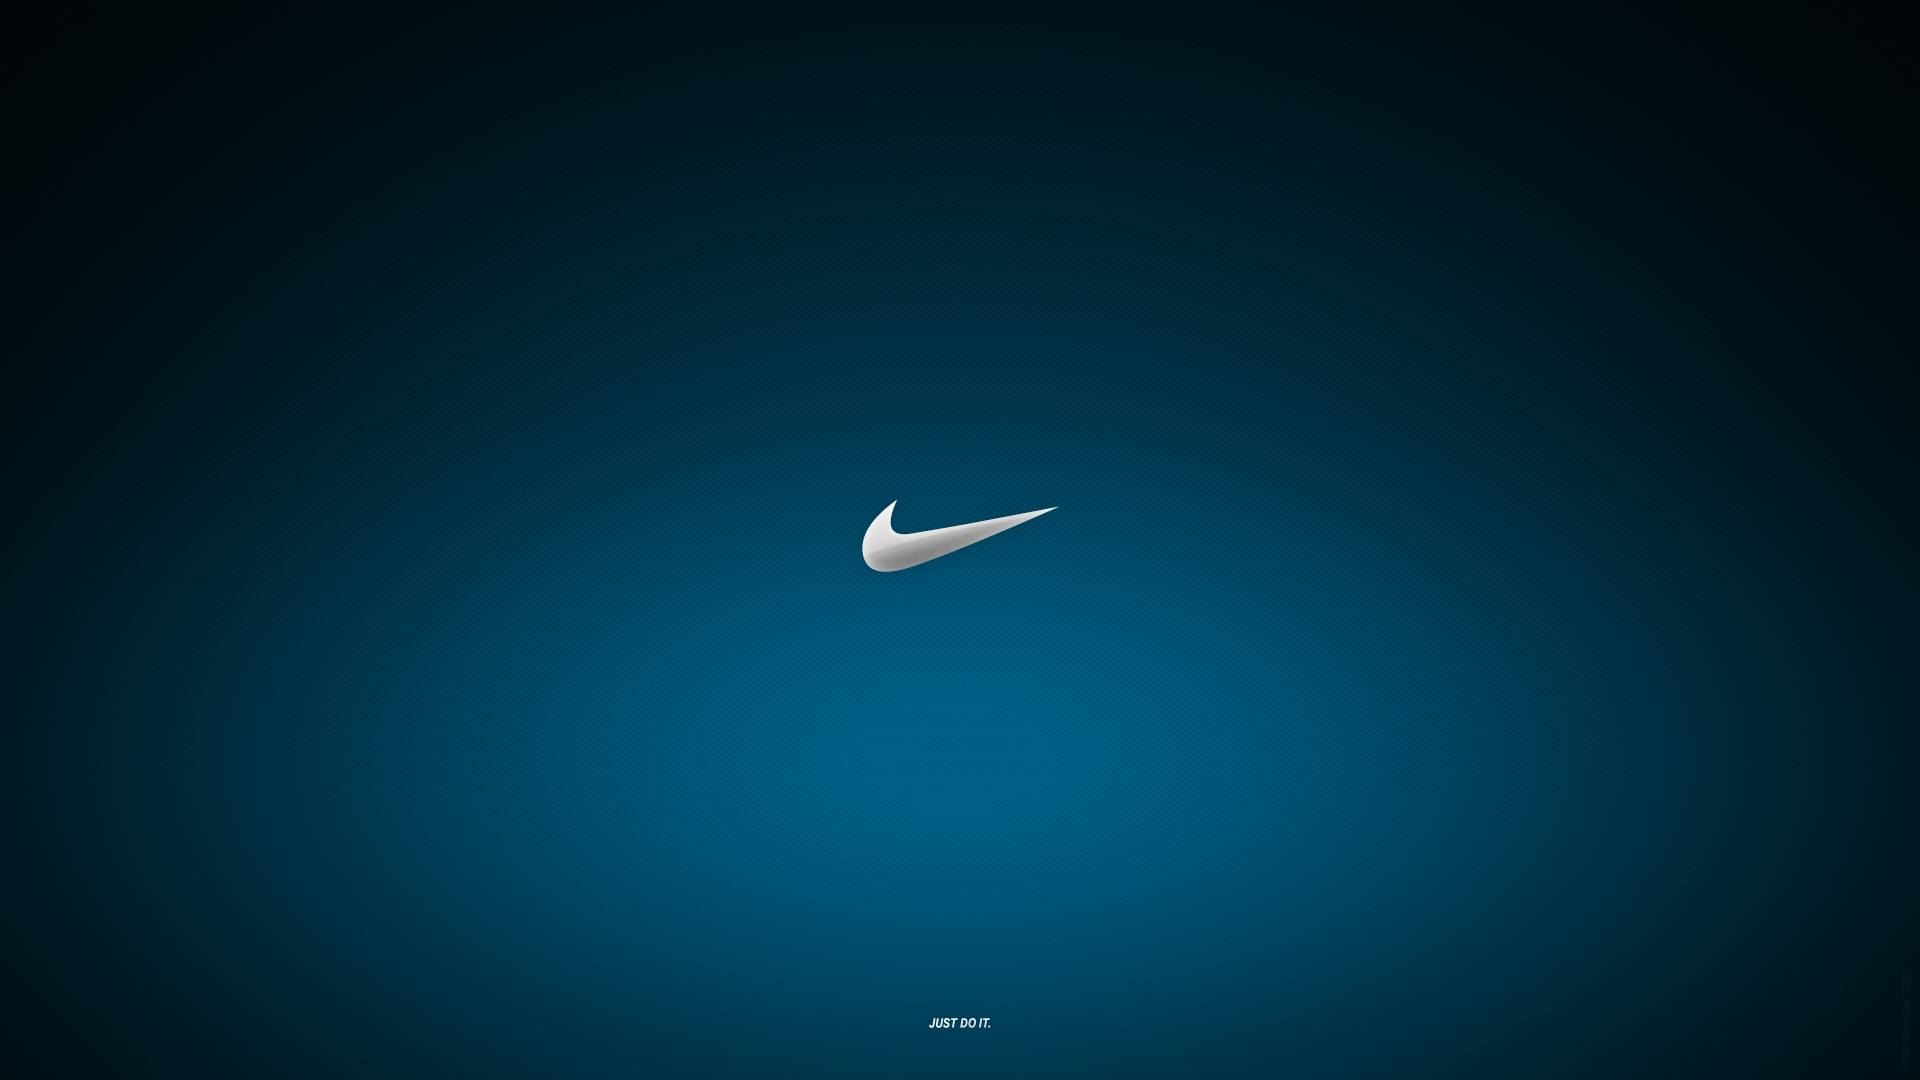 Nike logo on a blue background - Nike